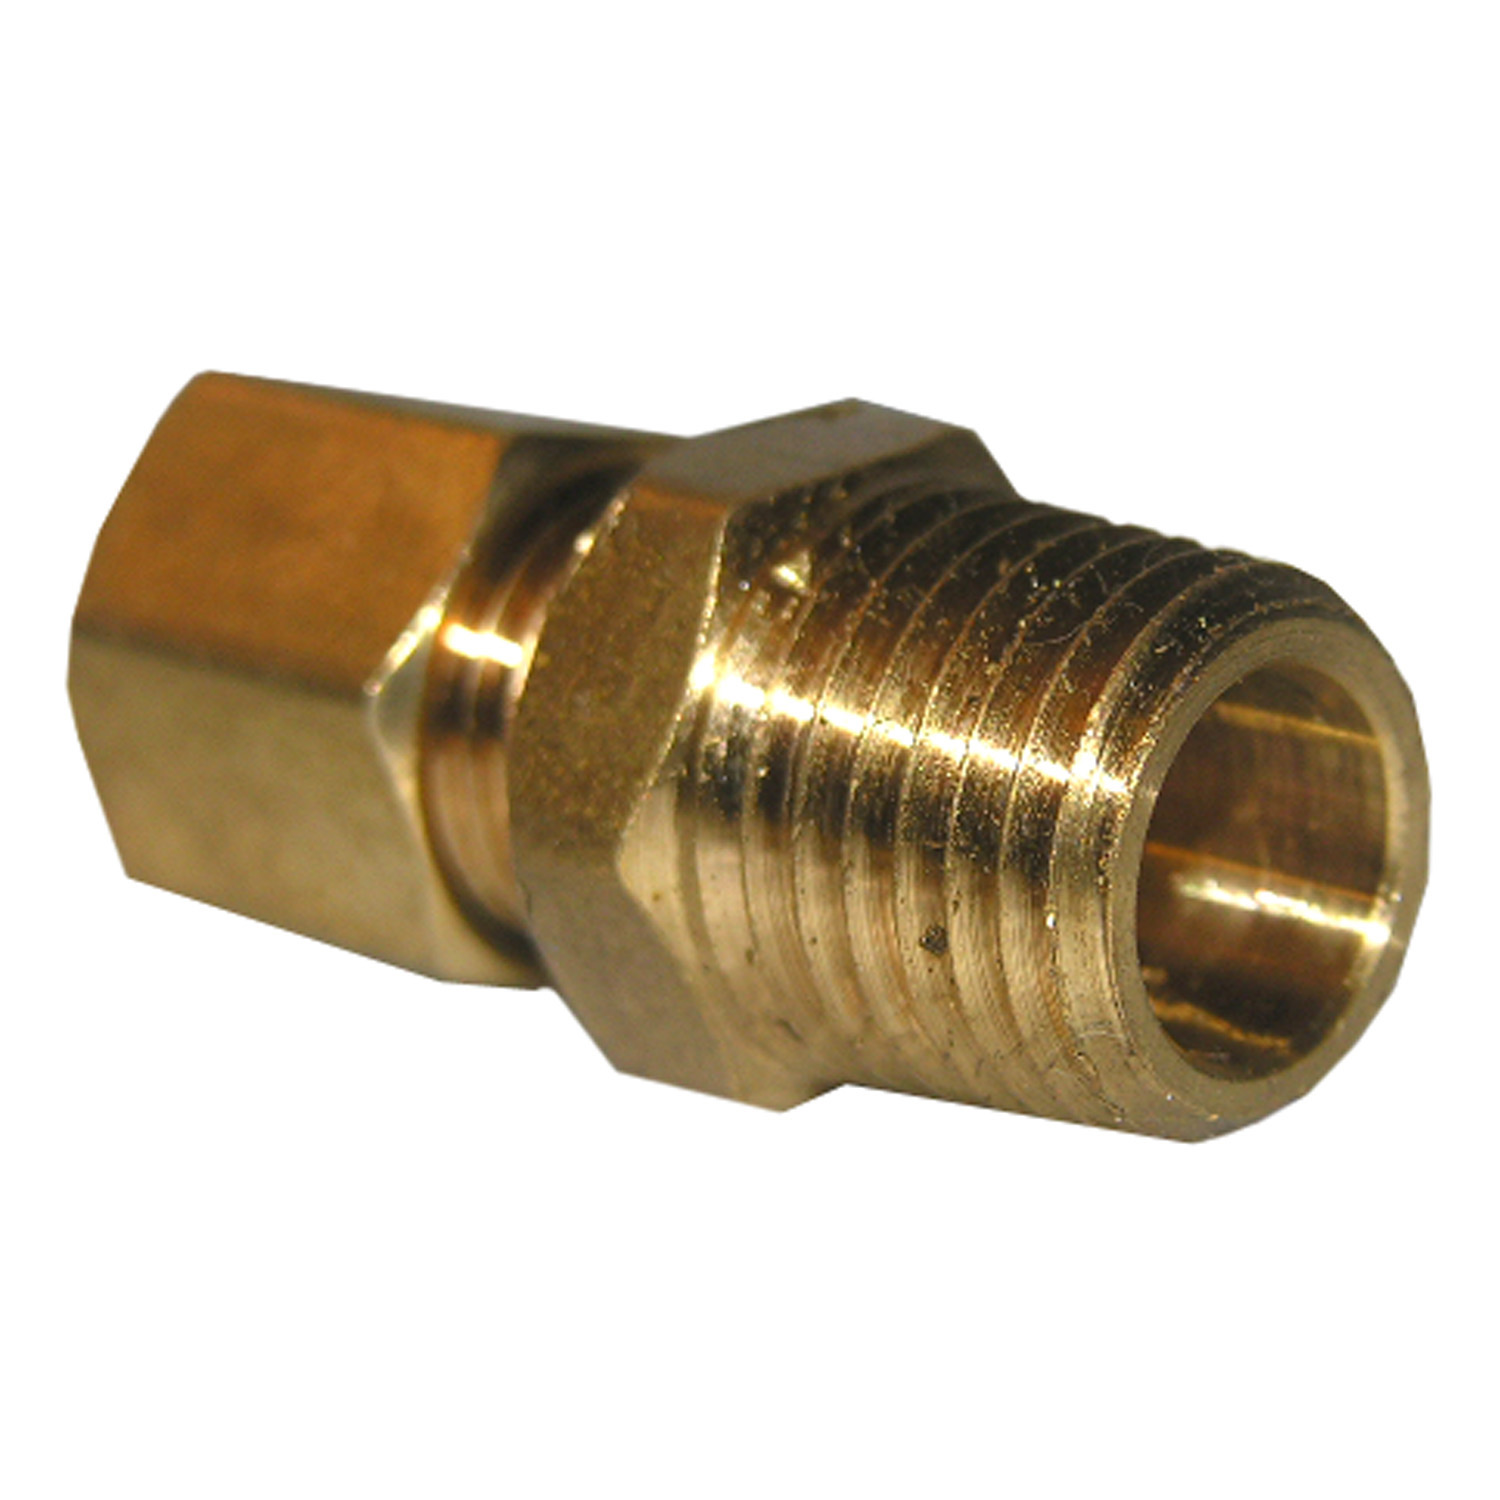 17-6807 Pipe Adapter, 3/16 x 1/8 in, Compression x MPT, Brass, 150 psi Pressure